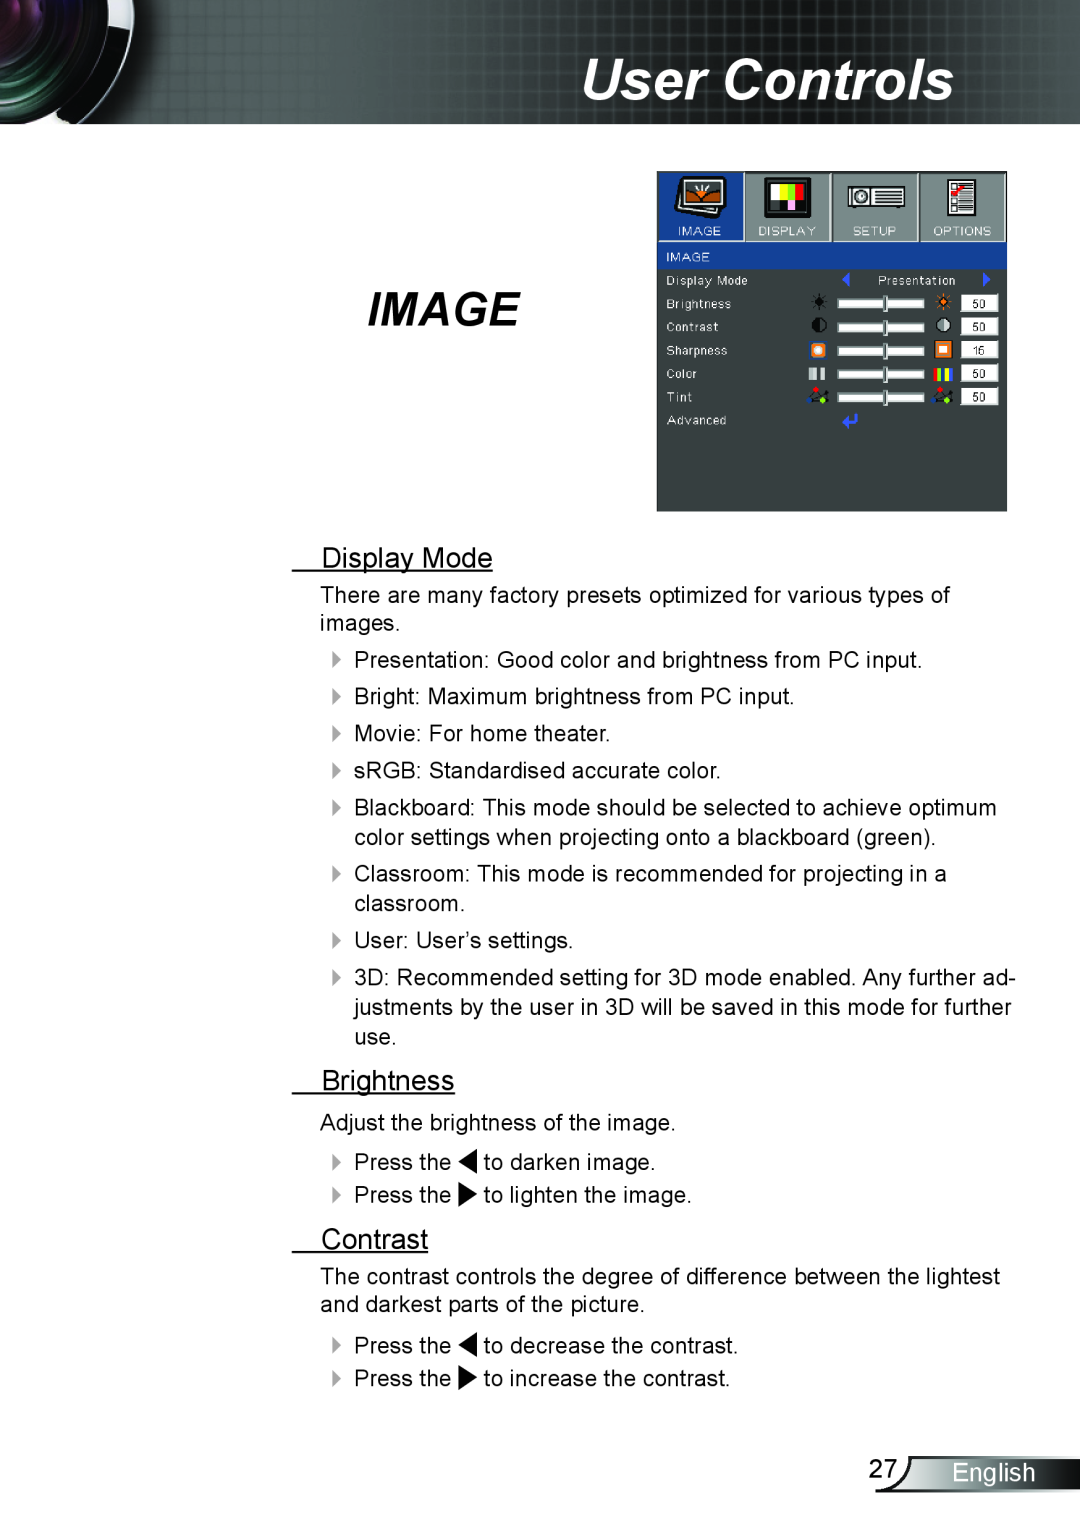 Optoma Technology TW762GOV manual Image, Display Mode, Brightness, Contrast, English, User Controls 